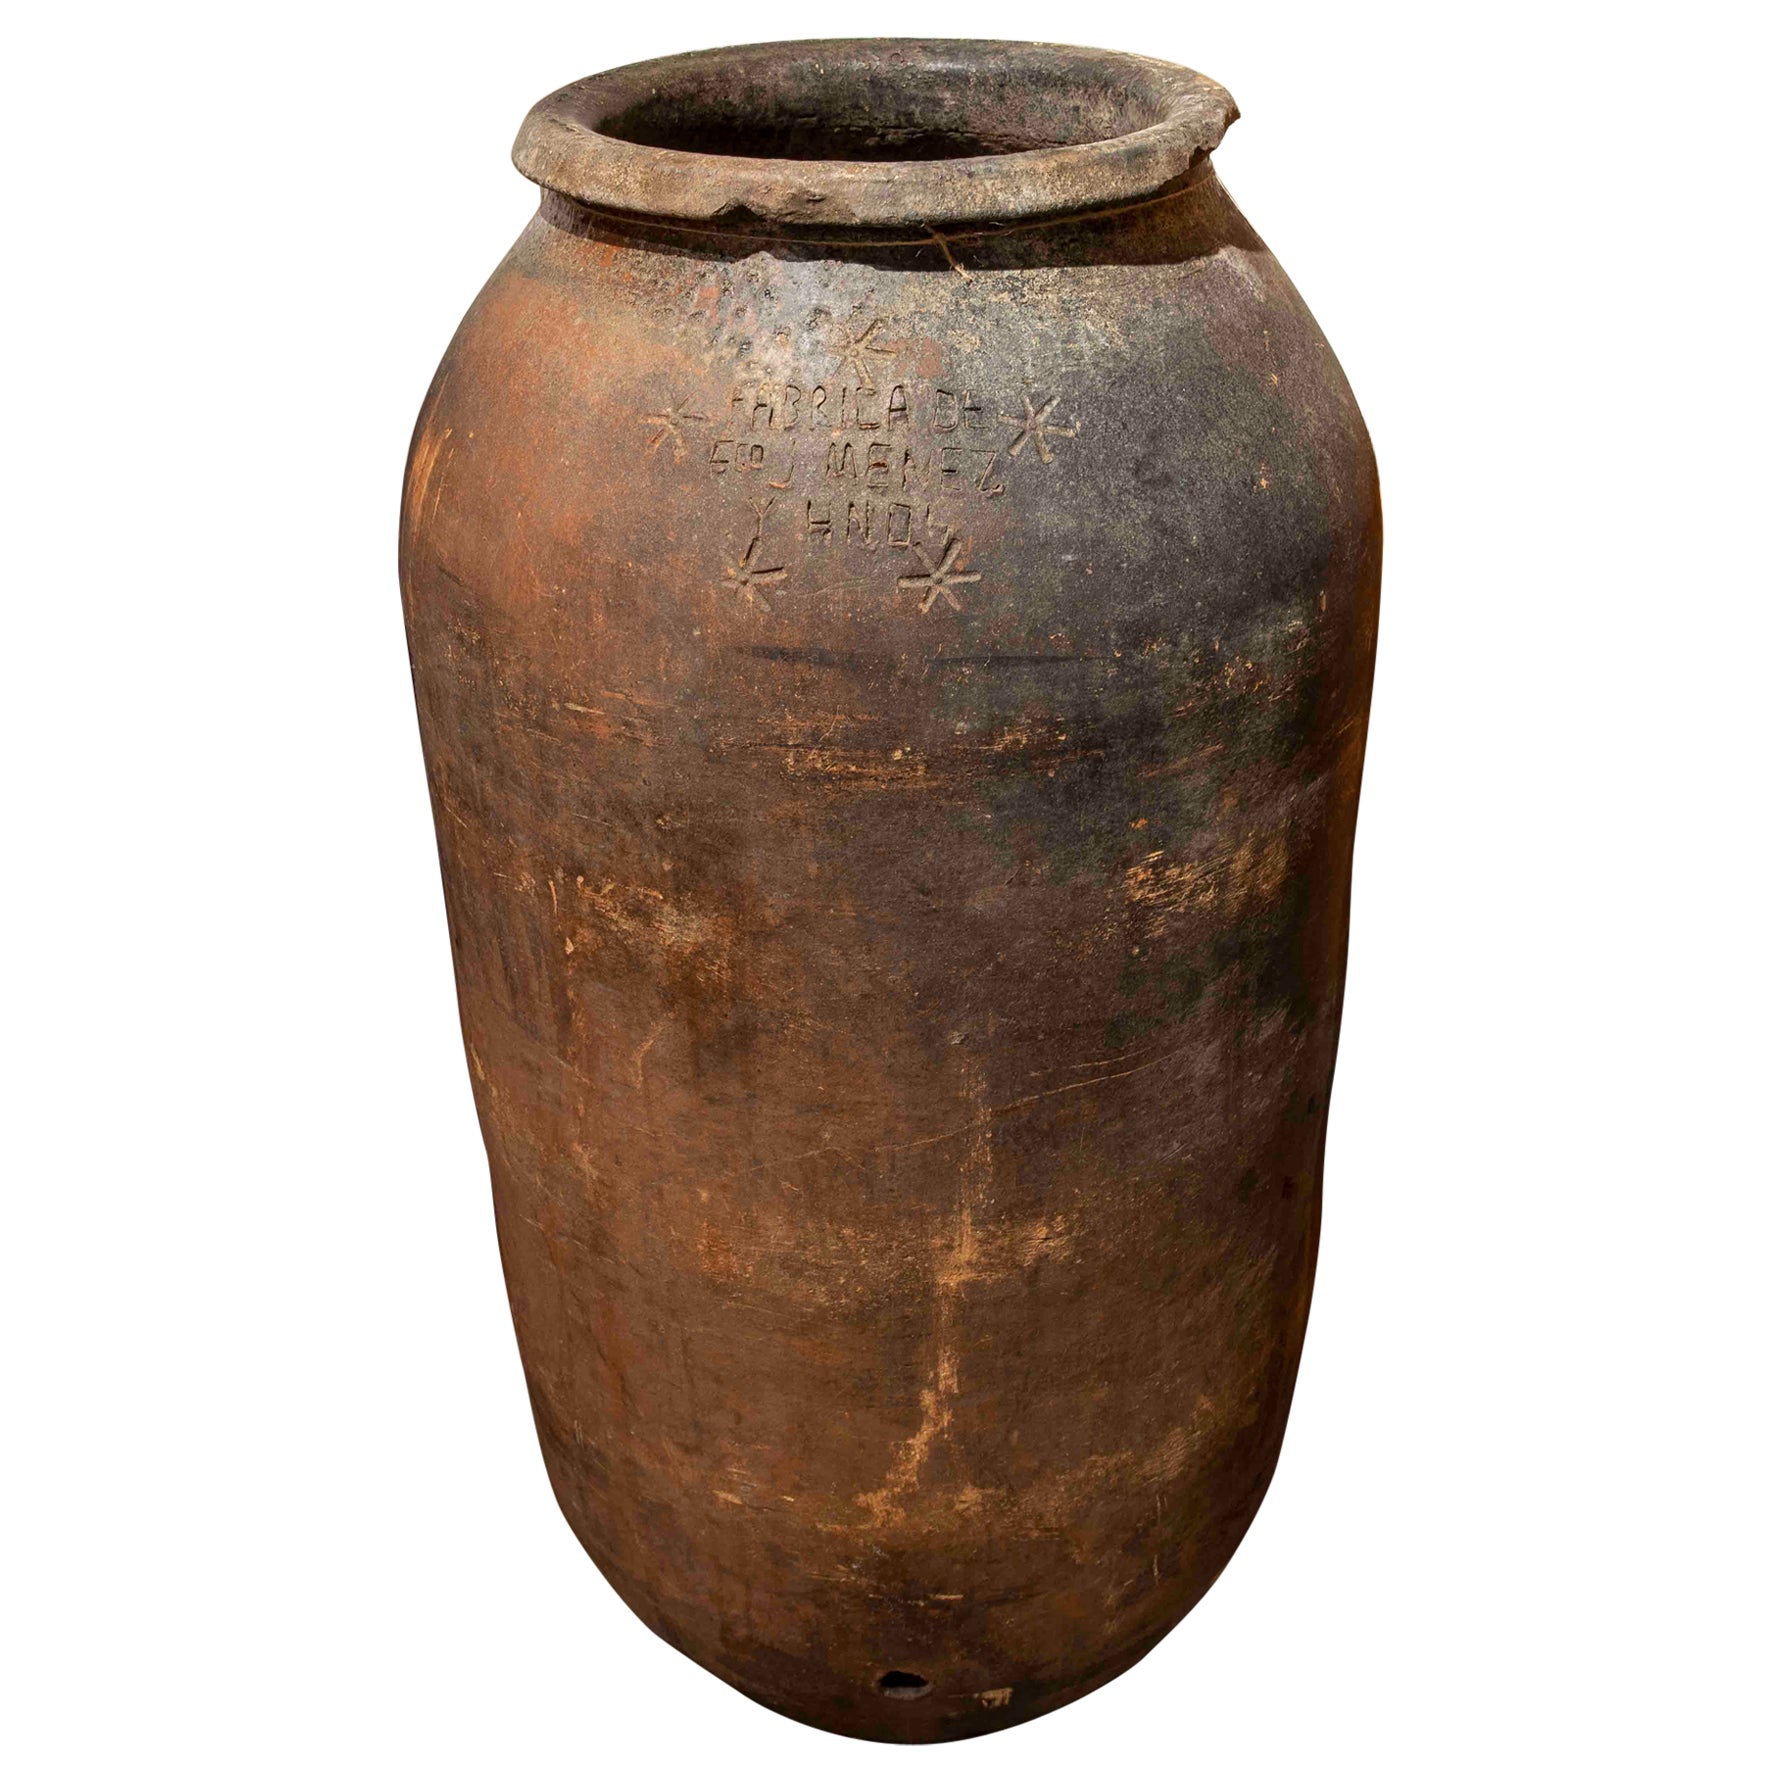 1930s Spanish Handmade Ceramic Wine Jar Sealed by the Manufacturer